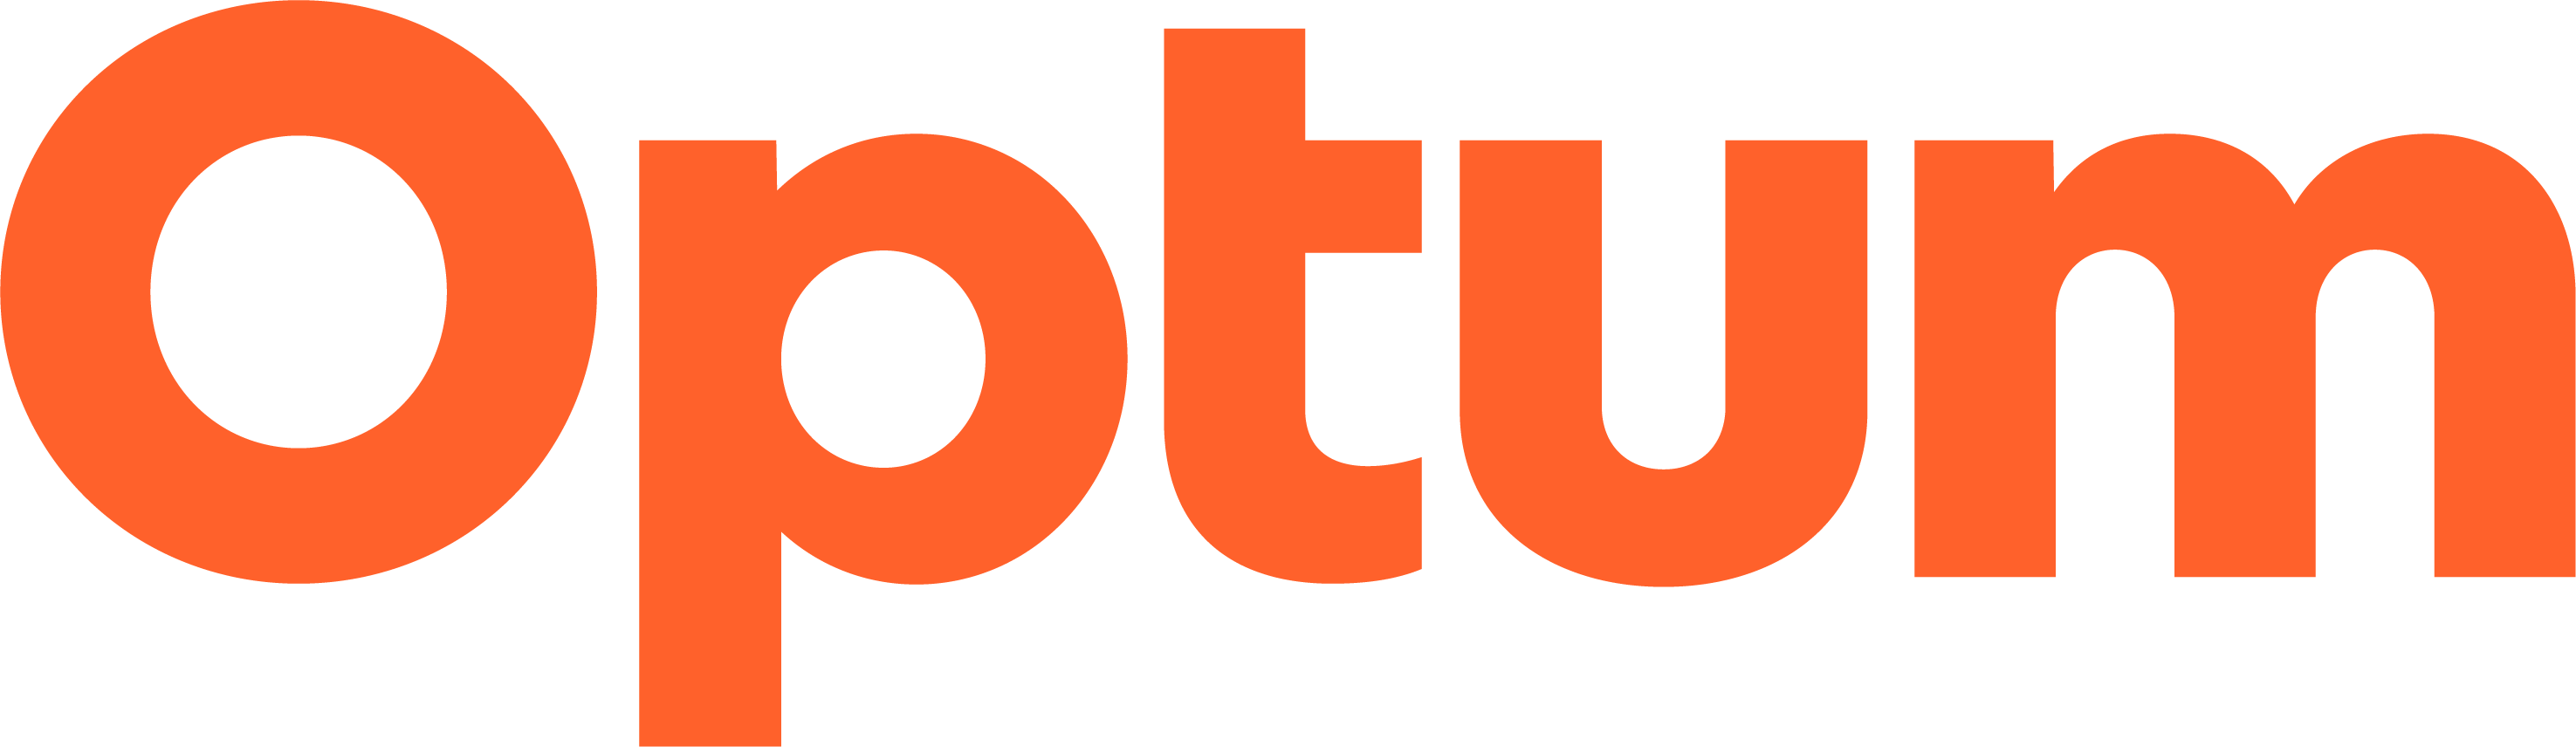 optum_logo